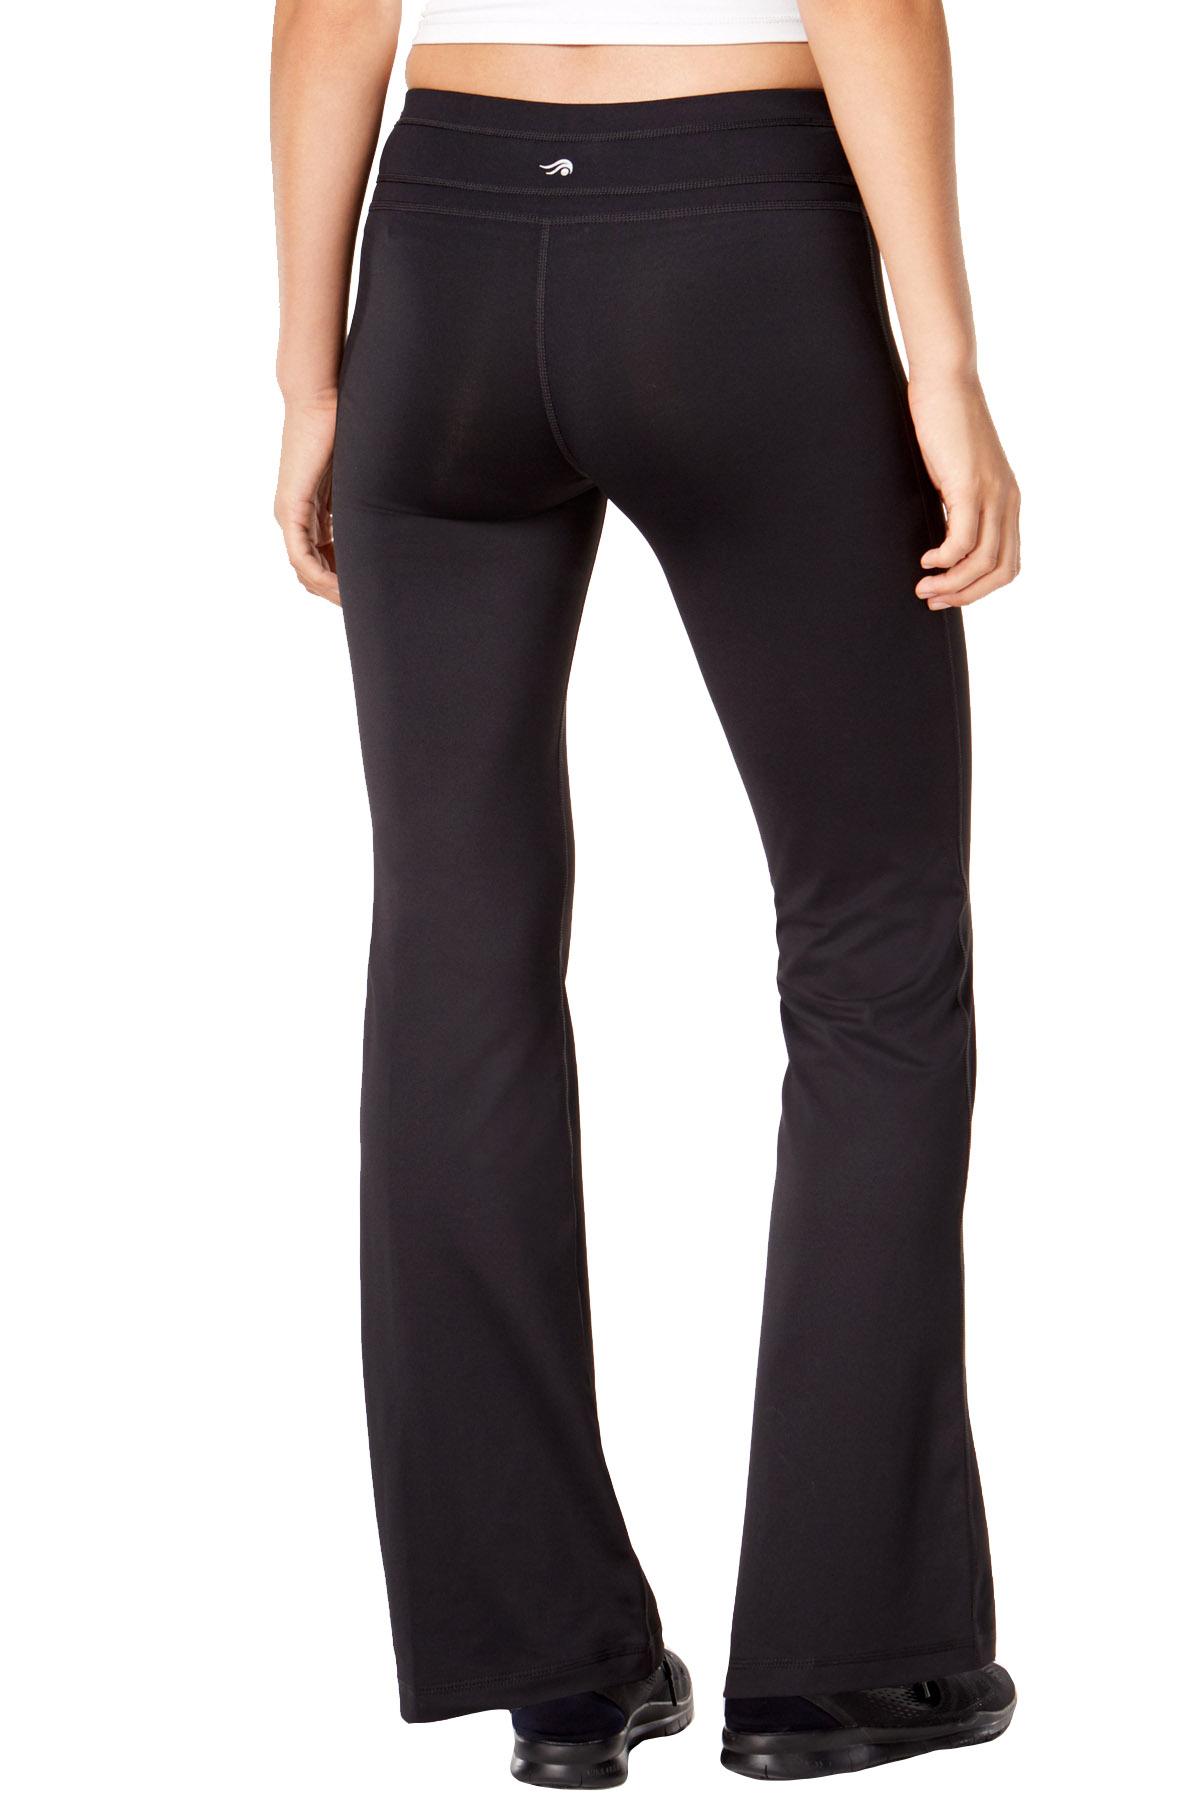 Safort 28 30 32 34 Inseam Regular Tall Bootcut Yoga Pants, 4 Pockets,  UPF50+, Black, XL